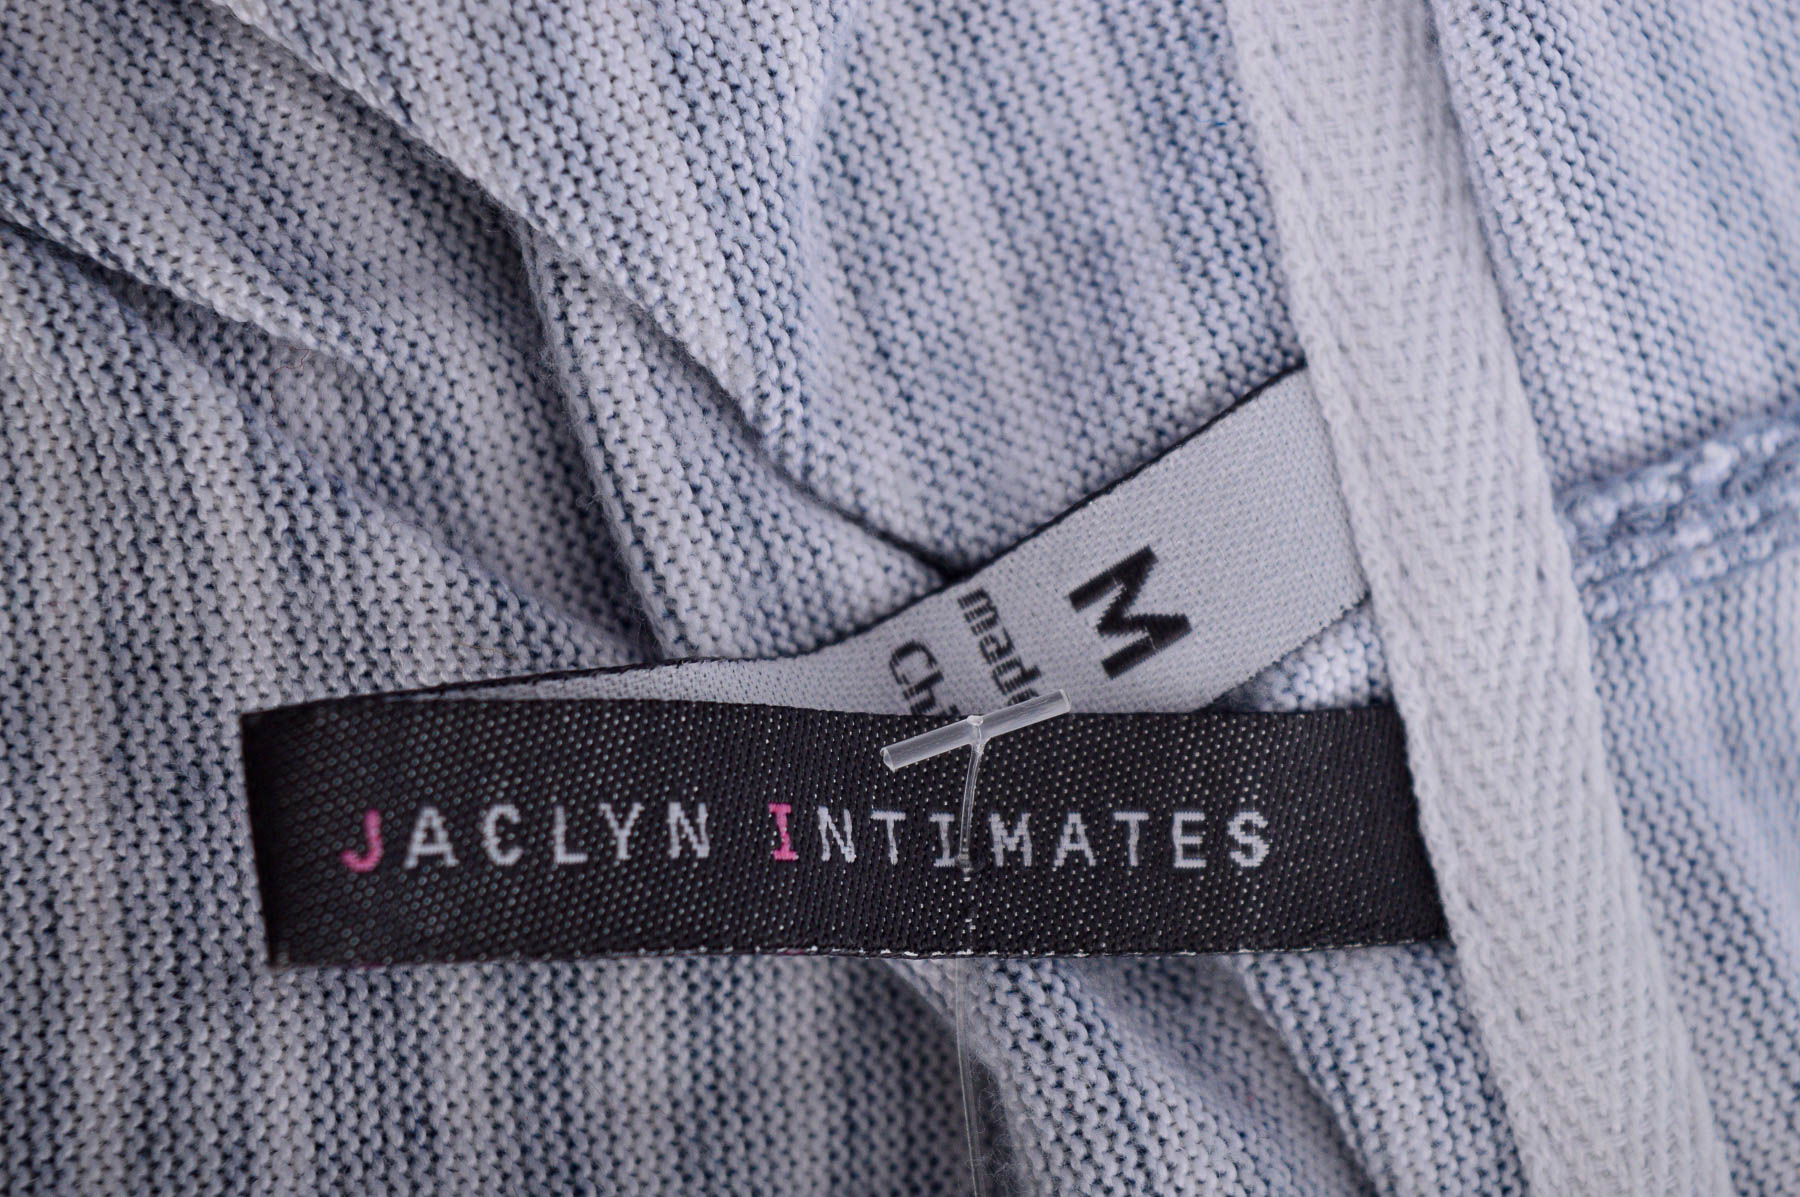 Cardigan / Jachetă de damă - JACLYN INTIMATES - 2